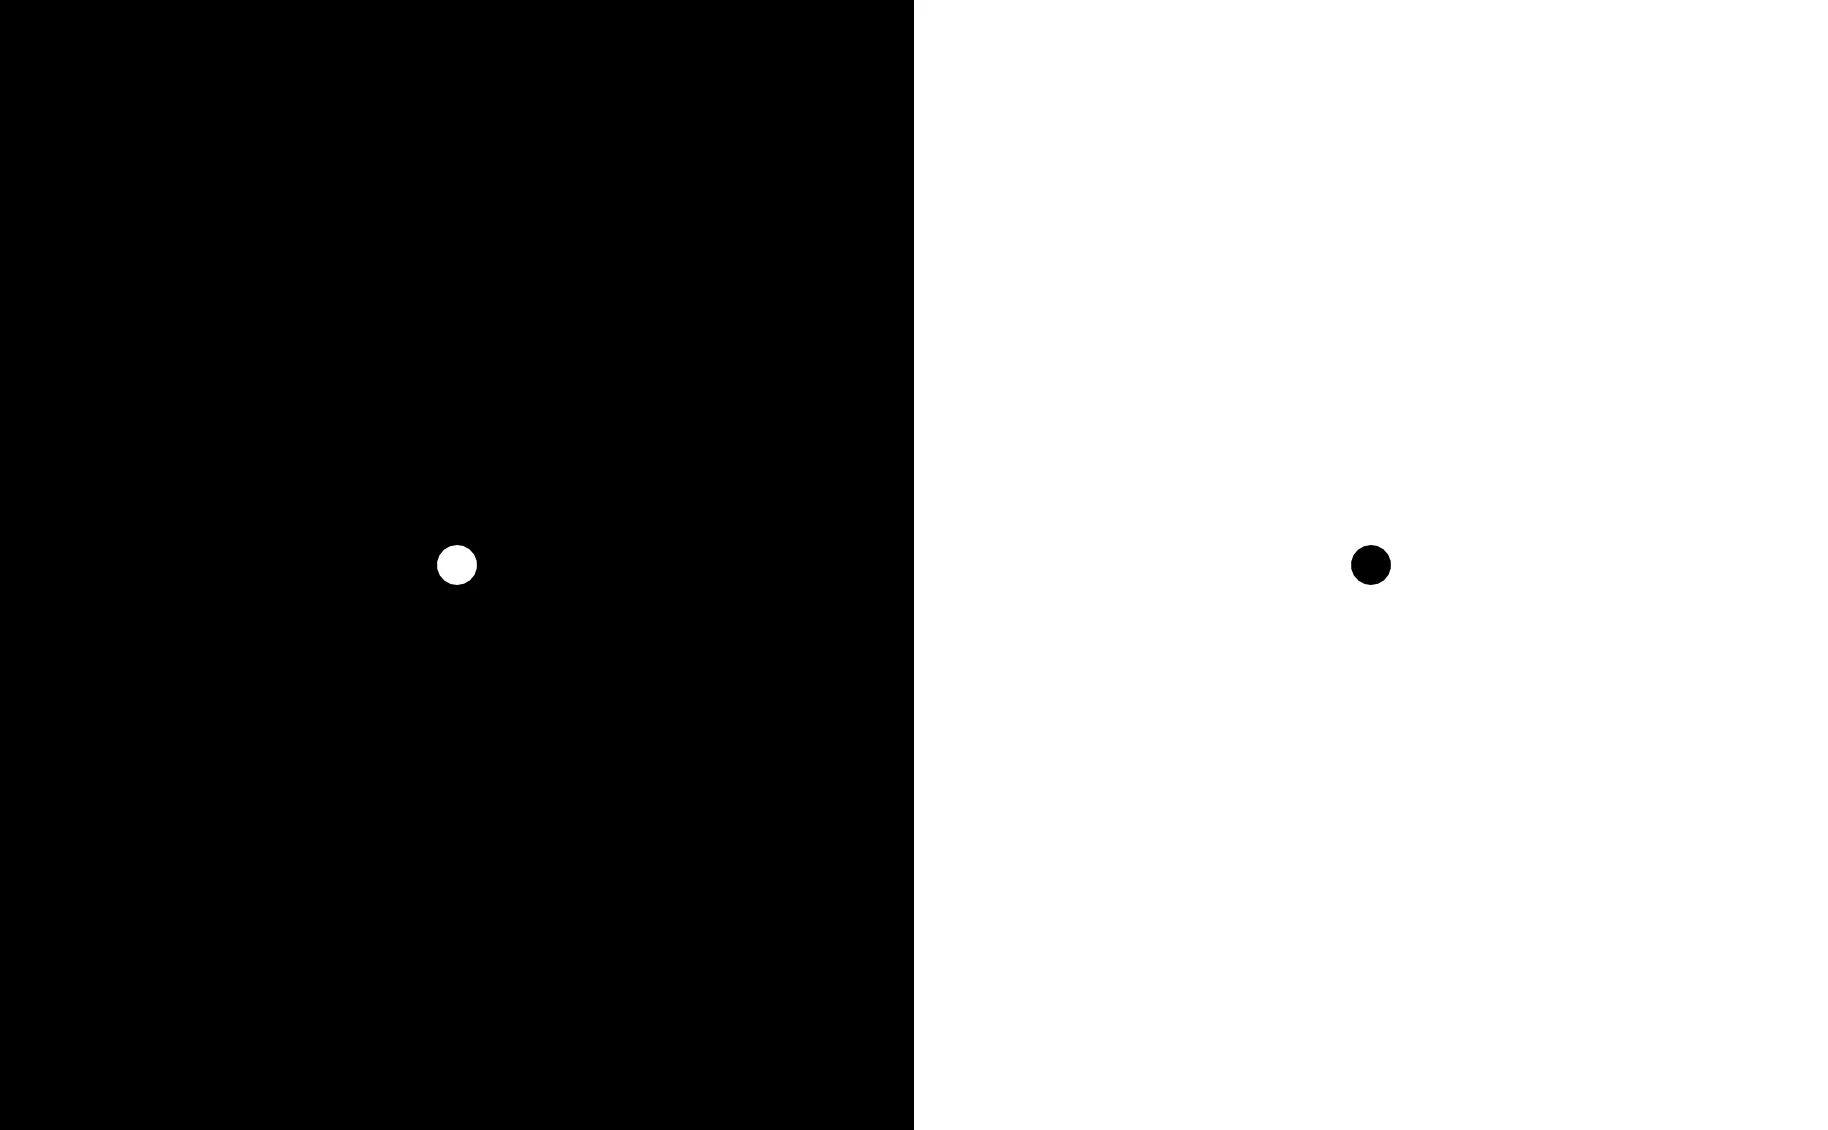 На экране строки и точки. Чёрный фон с белыми точками. Белая тачка на черном фоне. Черный фон с точками.